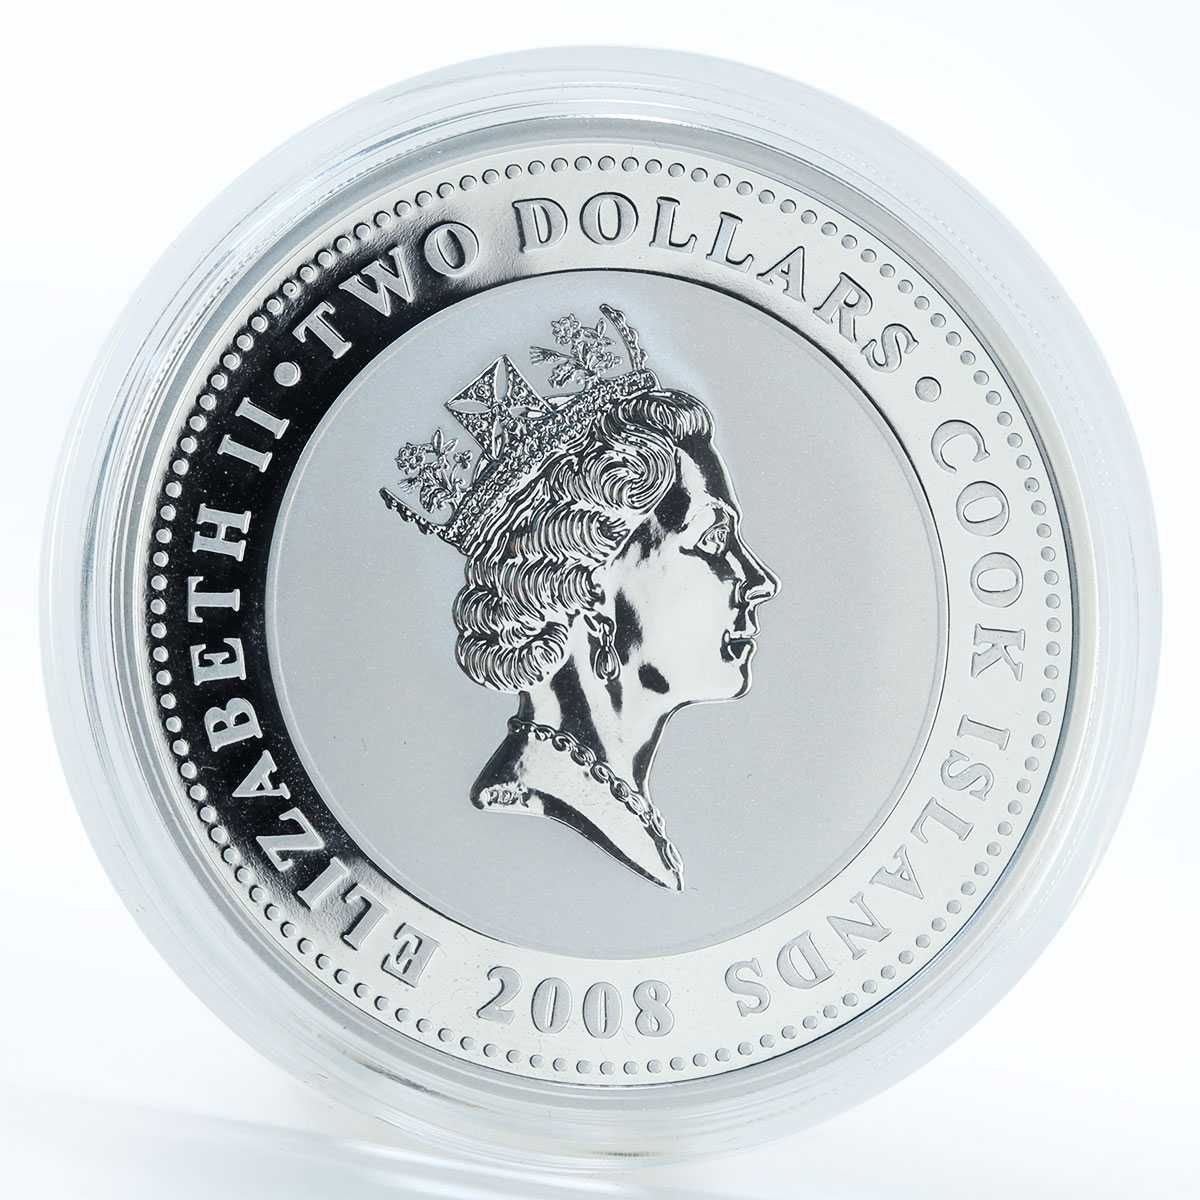 Коллекционная монета серебро серебряная 999 проба